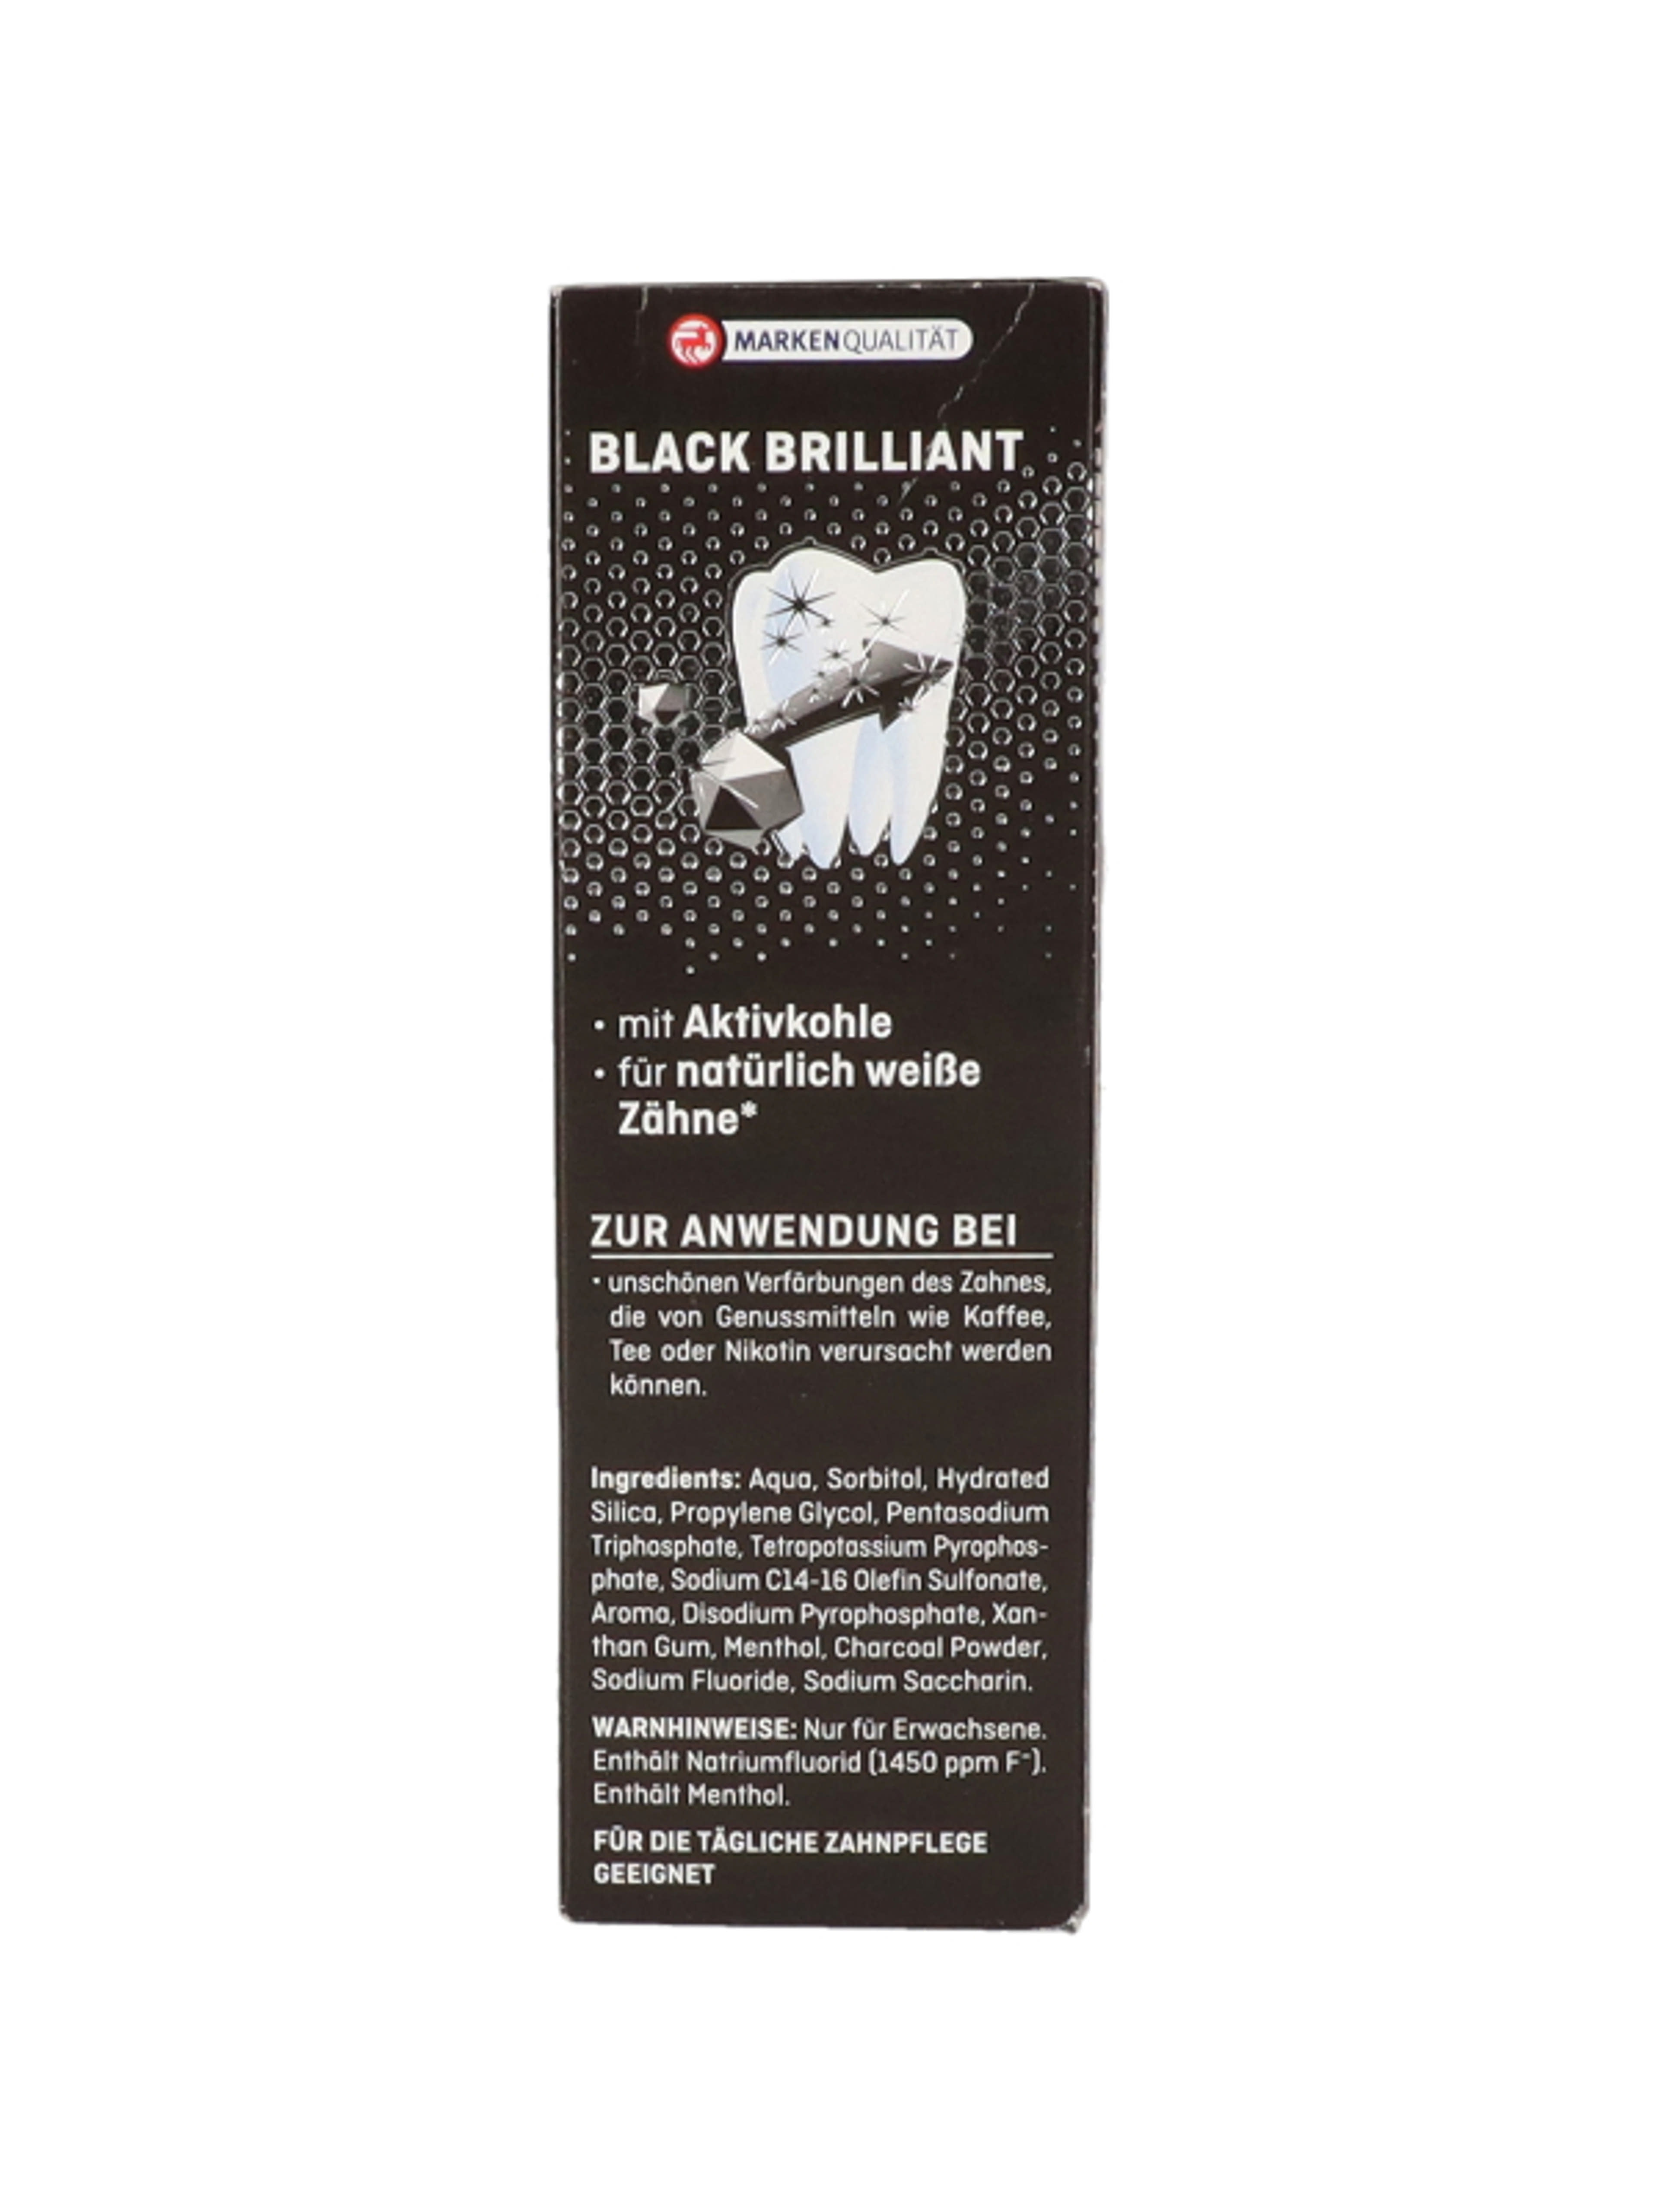 Prokudent fogkrém black brillant - 75 ml-4